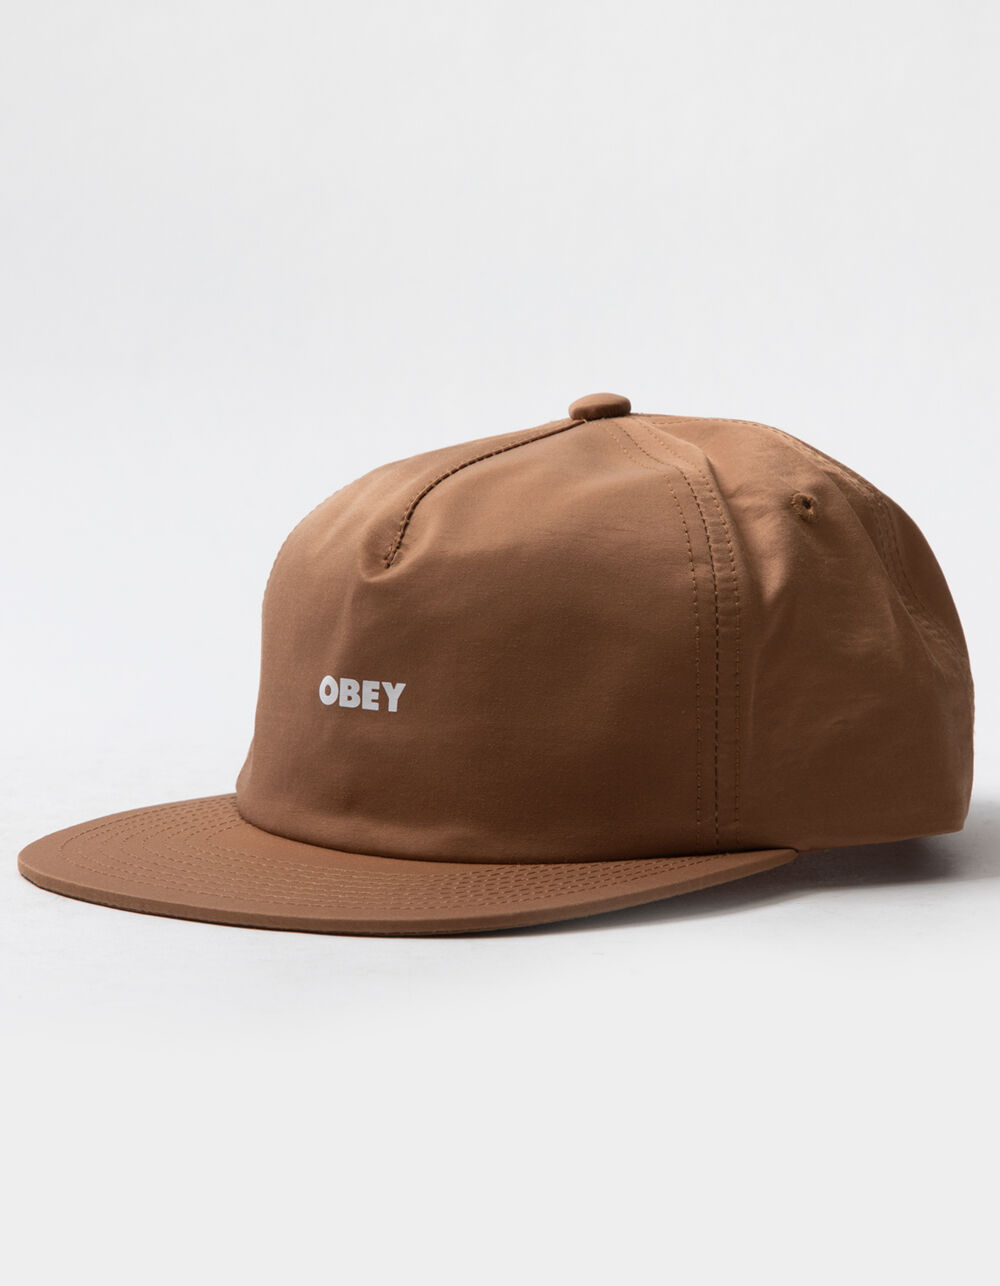 Obey Hats | Tillys